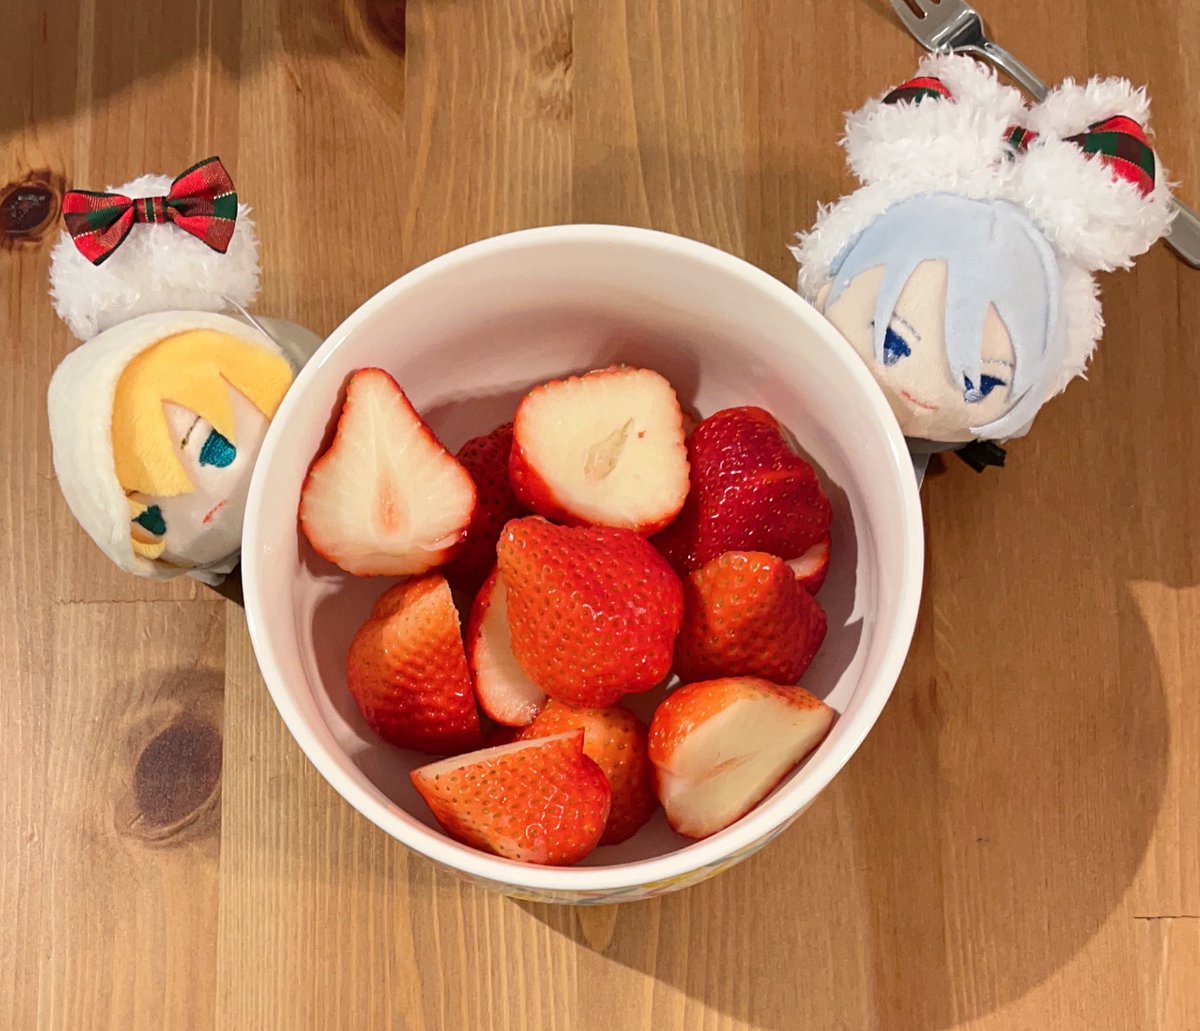 food blue eyes strawberry blonde hair fruit plate table  illustration images